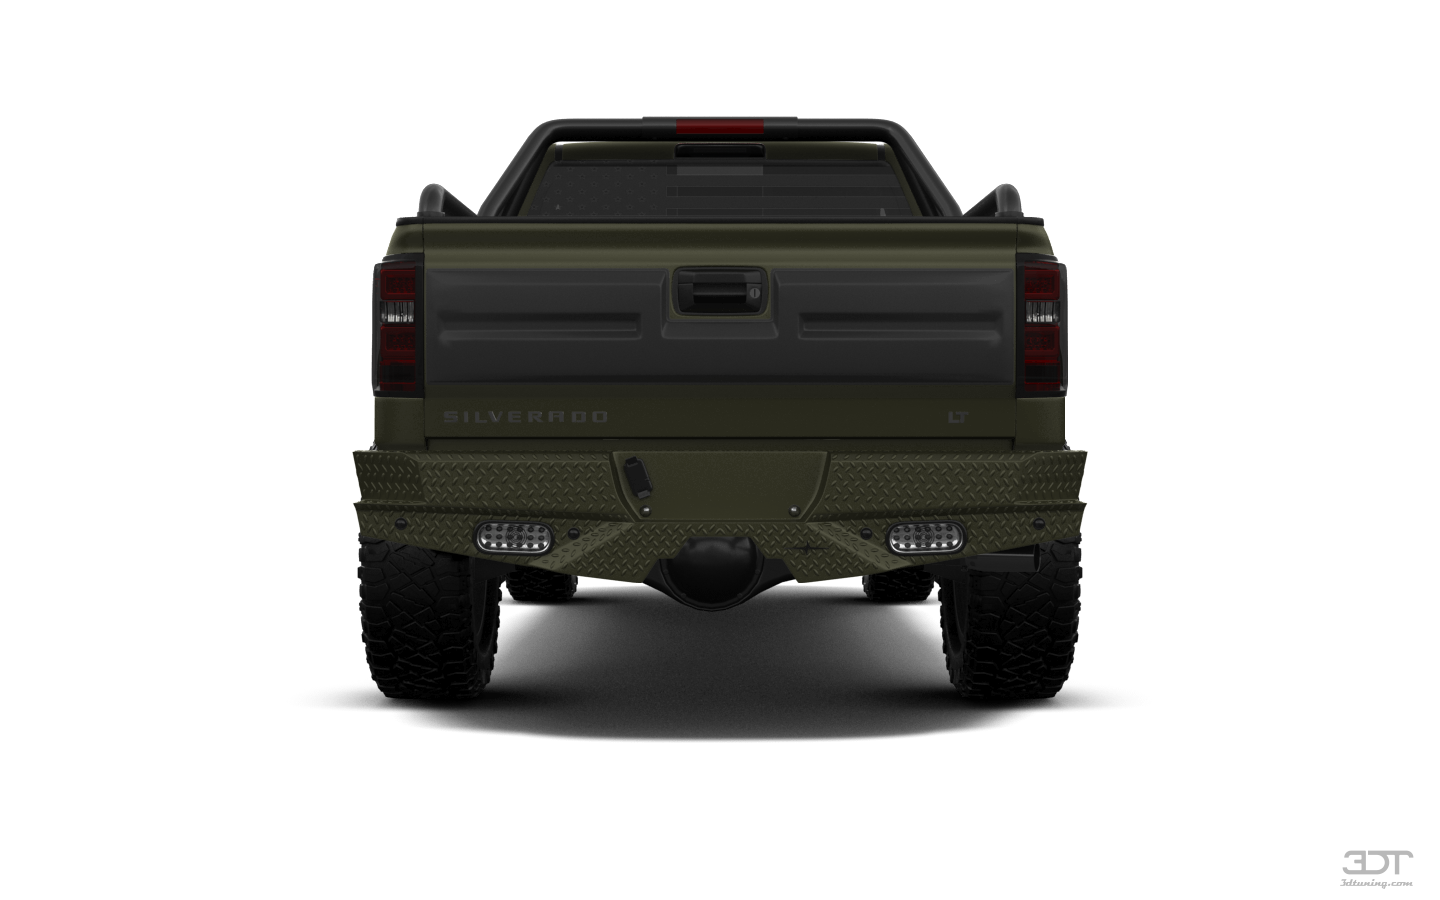 Chevrolet Silverado 1500 4 Door pickup truck 2014 tuning